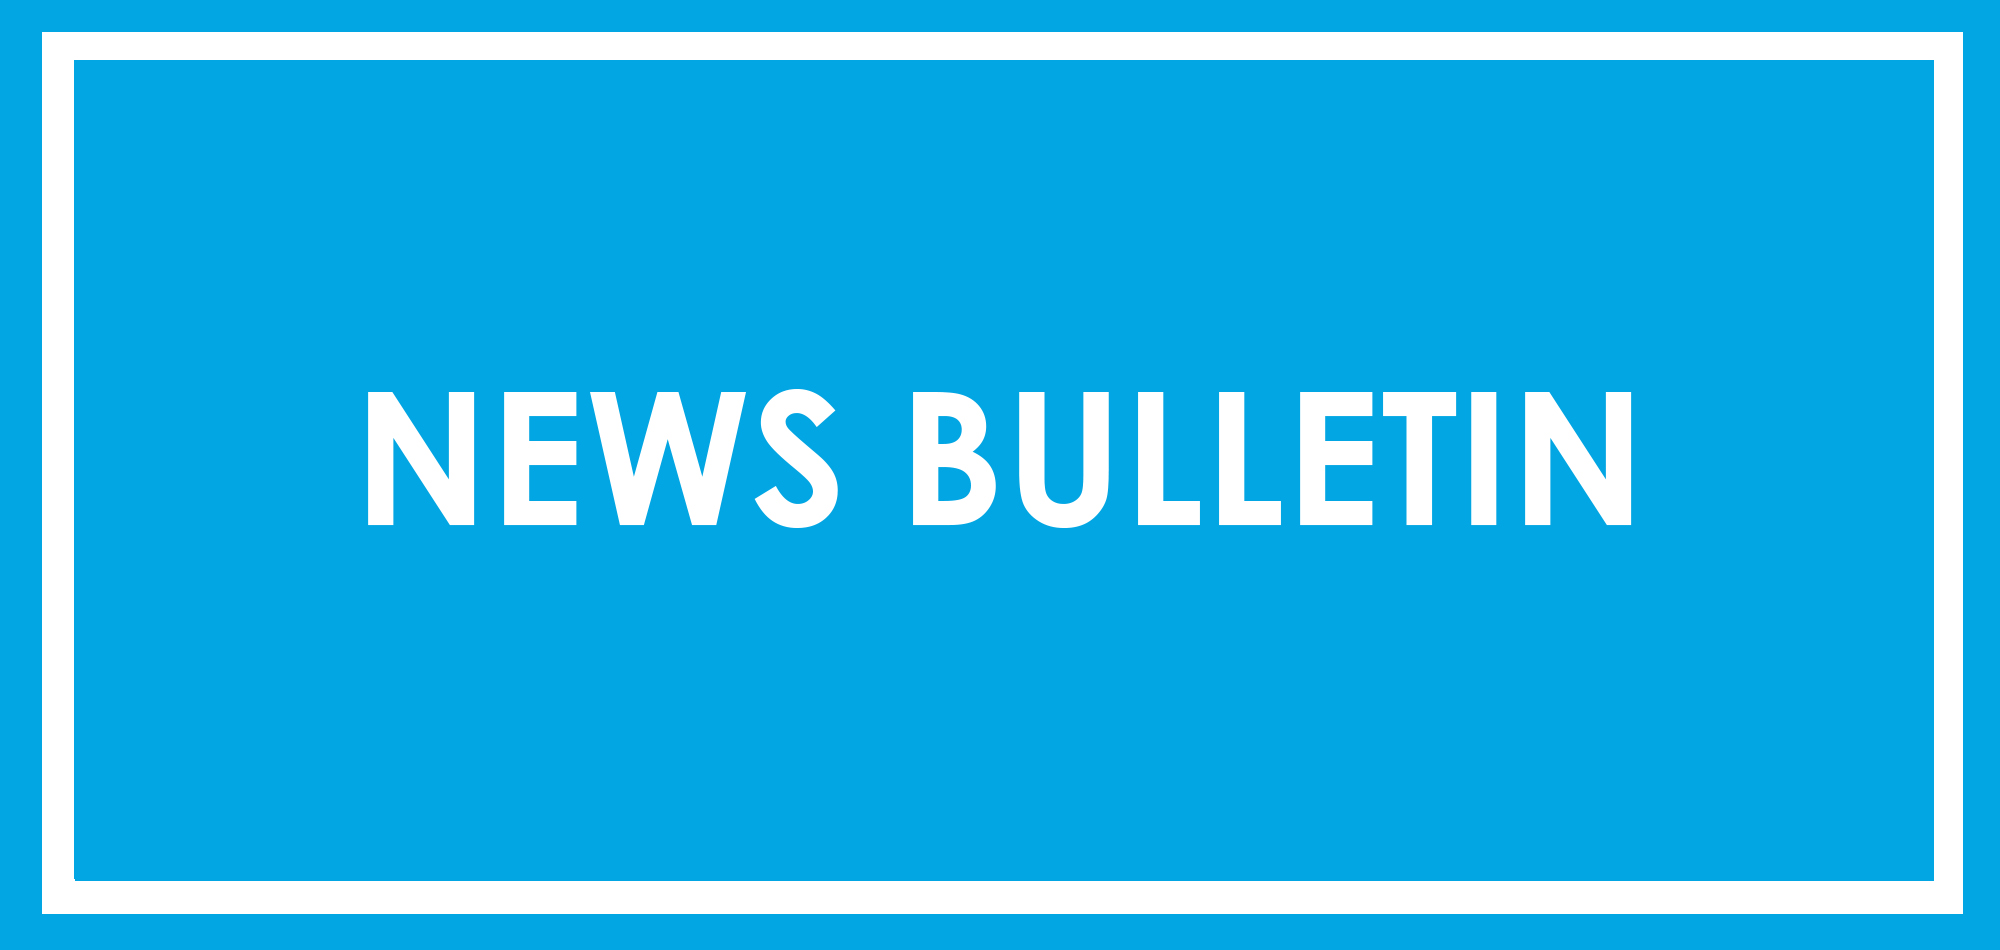 News Bulletin - 19.07.21